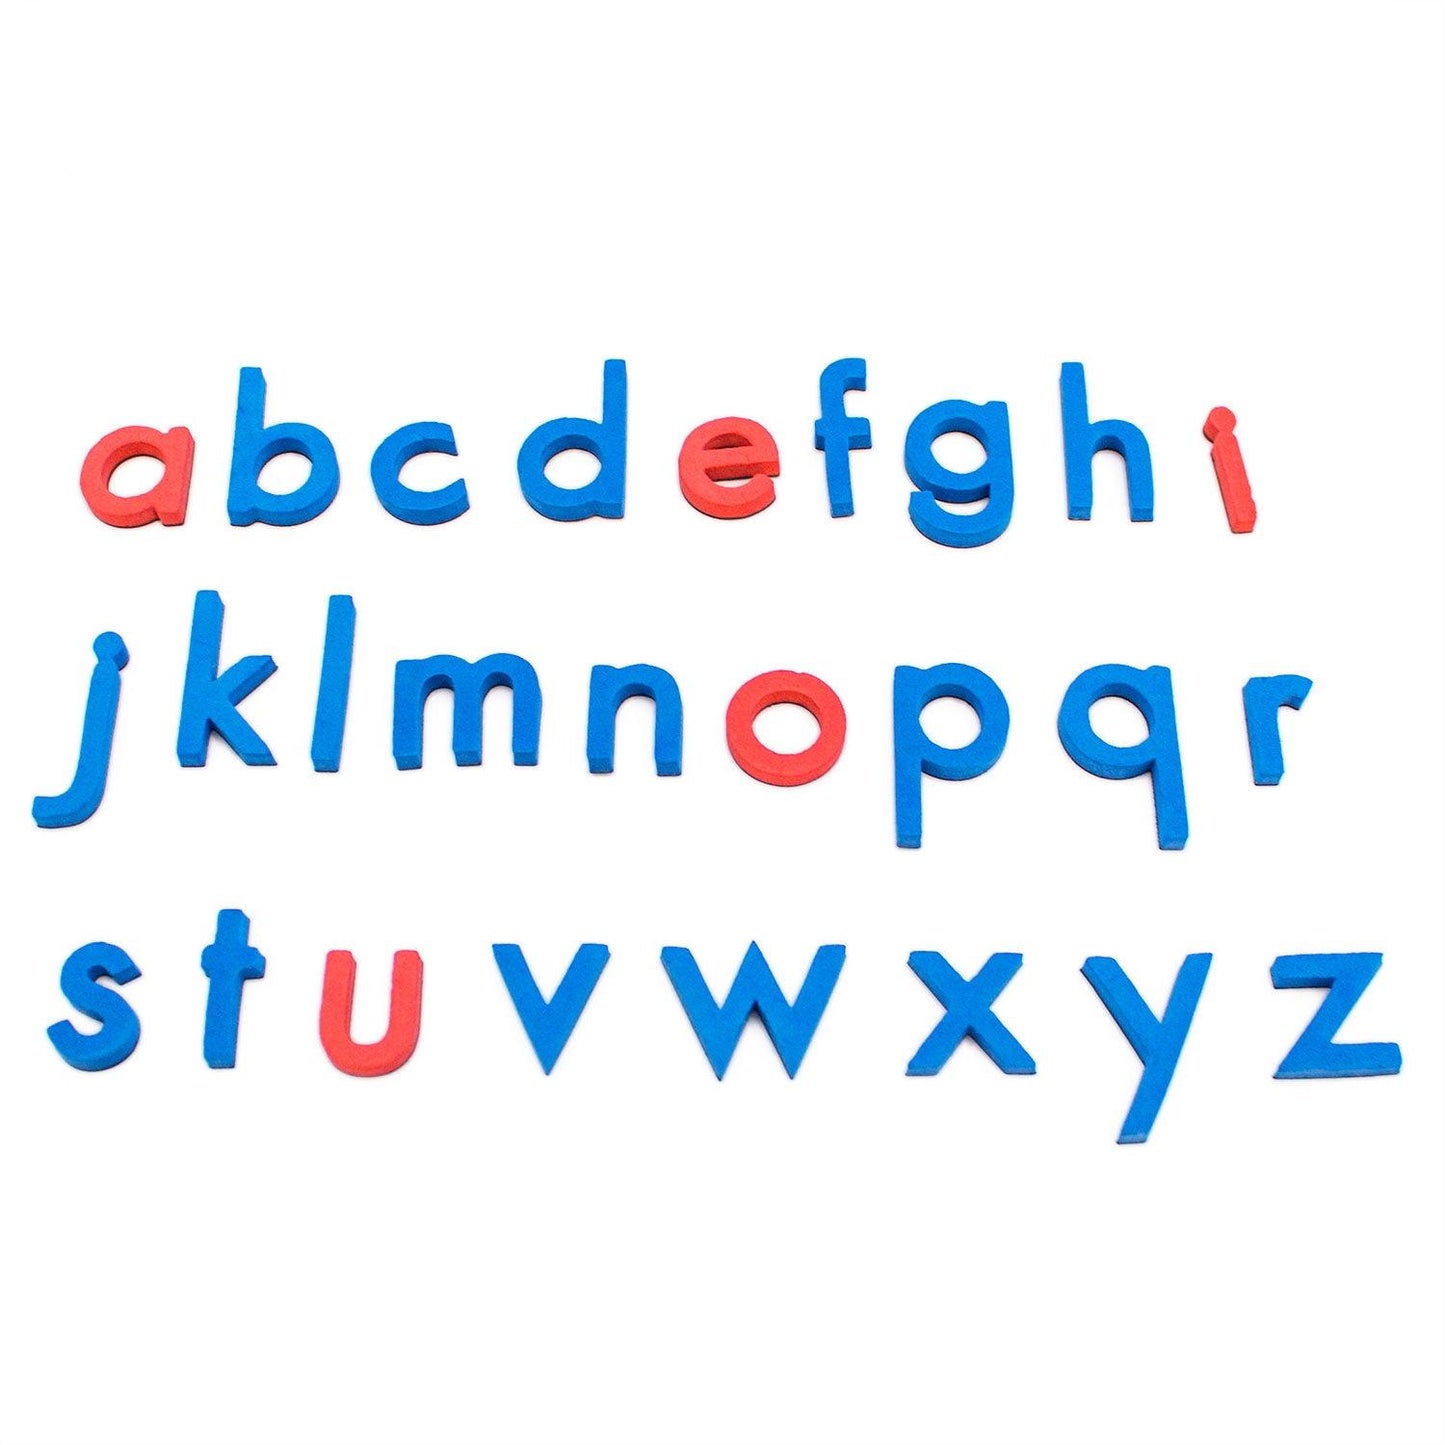 Rainbow Alphabet and Digraphs, Print - Loomini